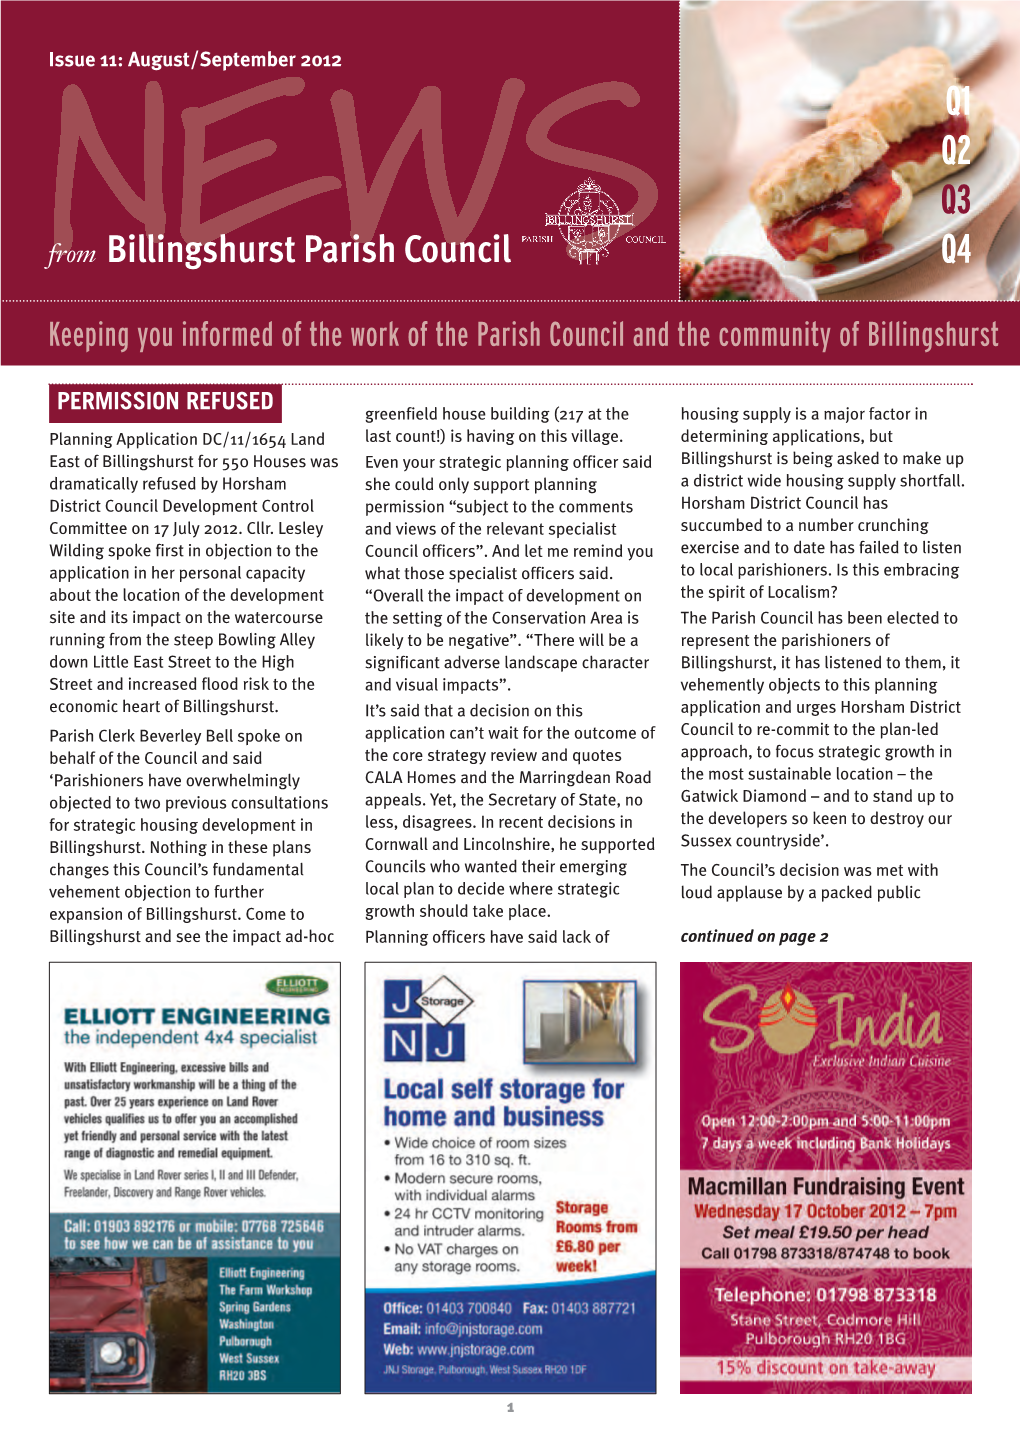 From Billingshurst Parish Council Q4